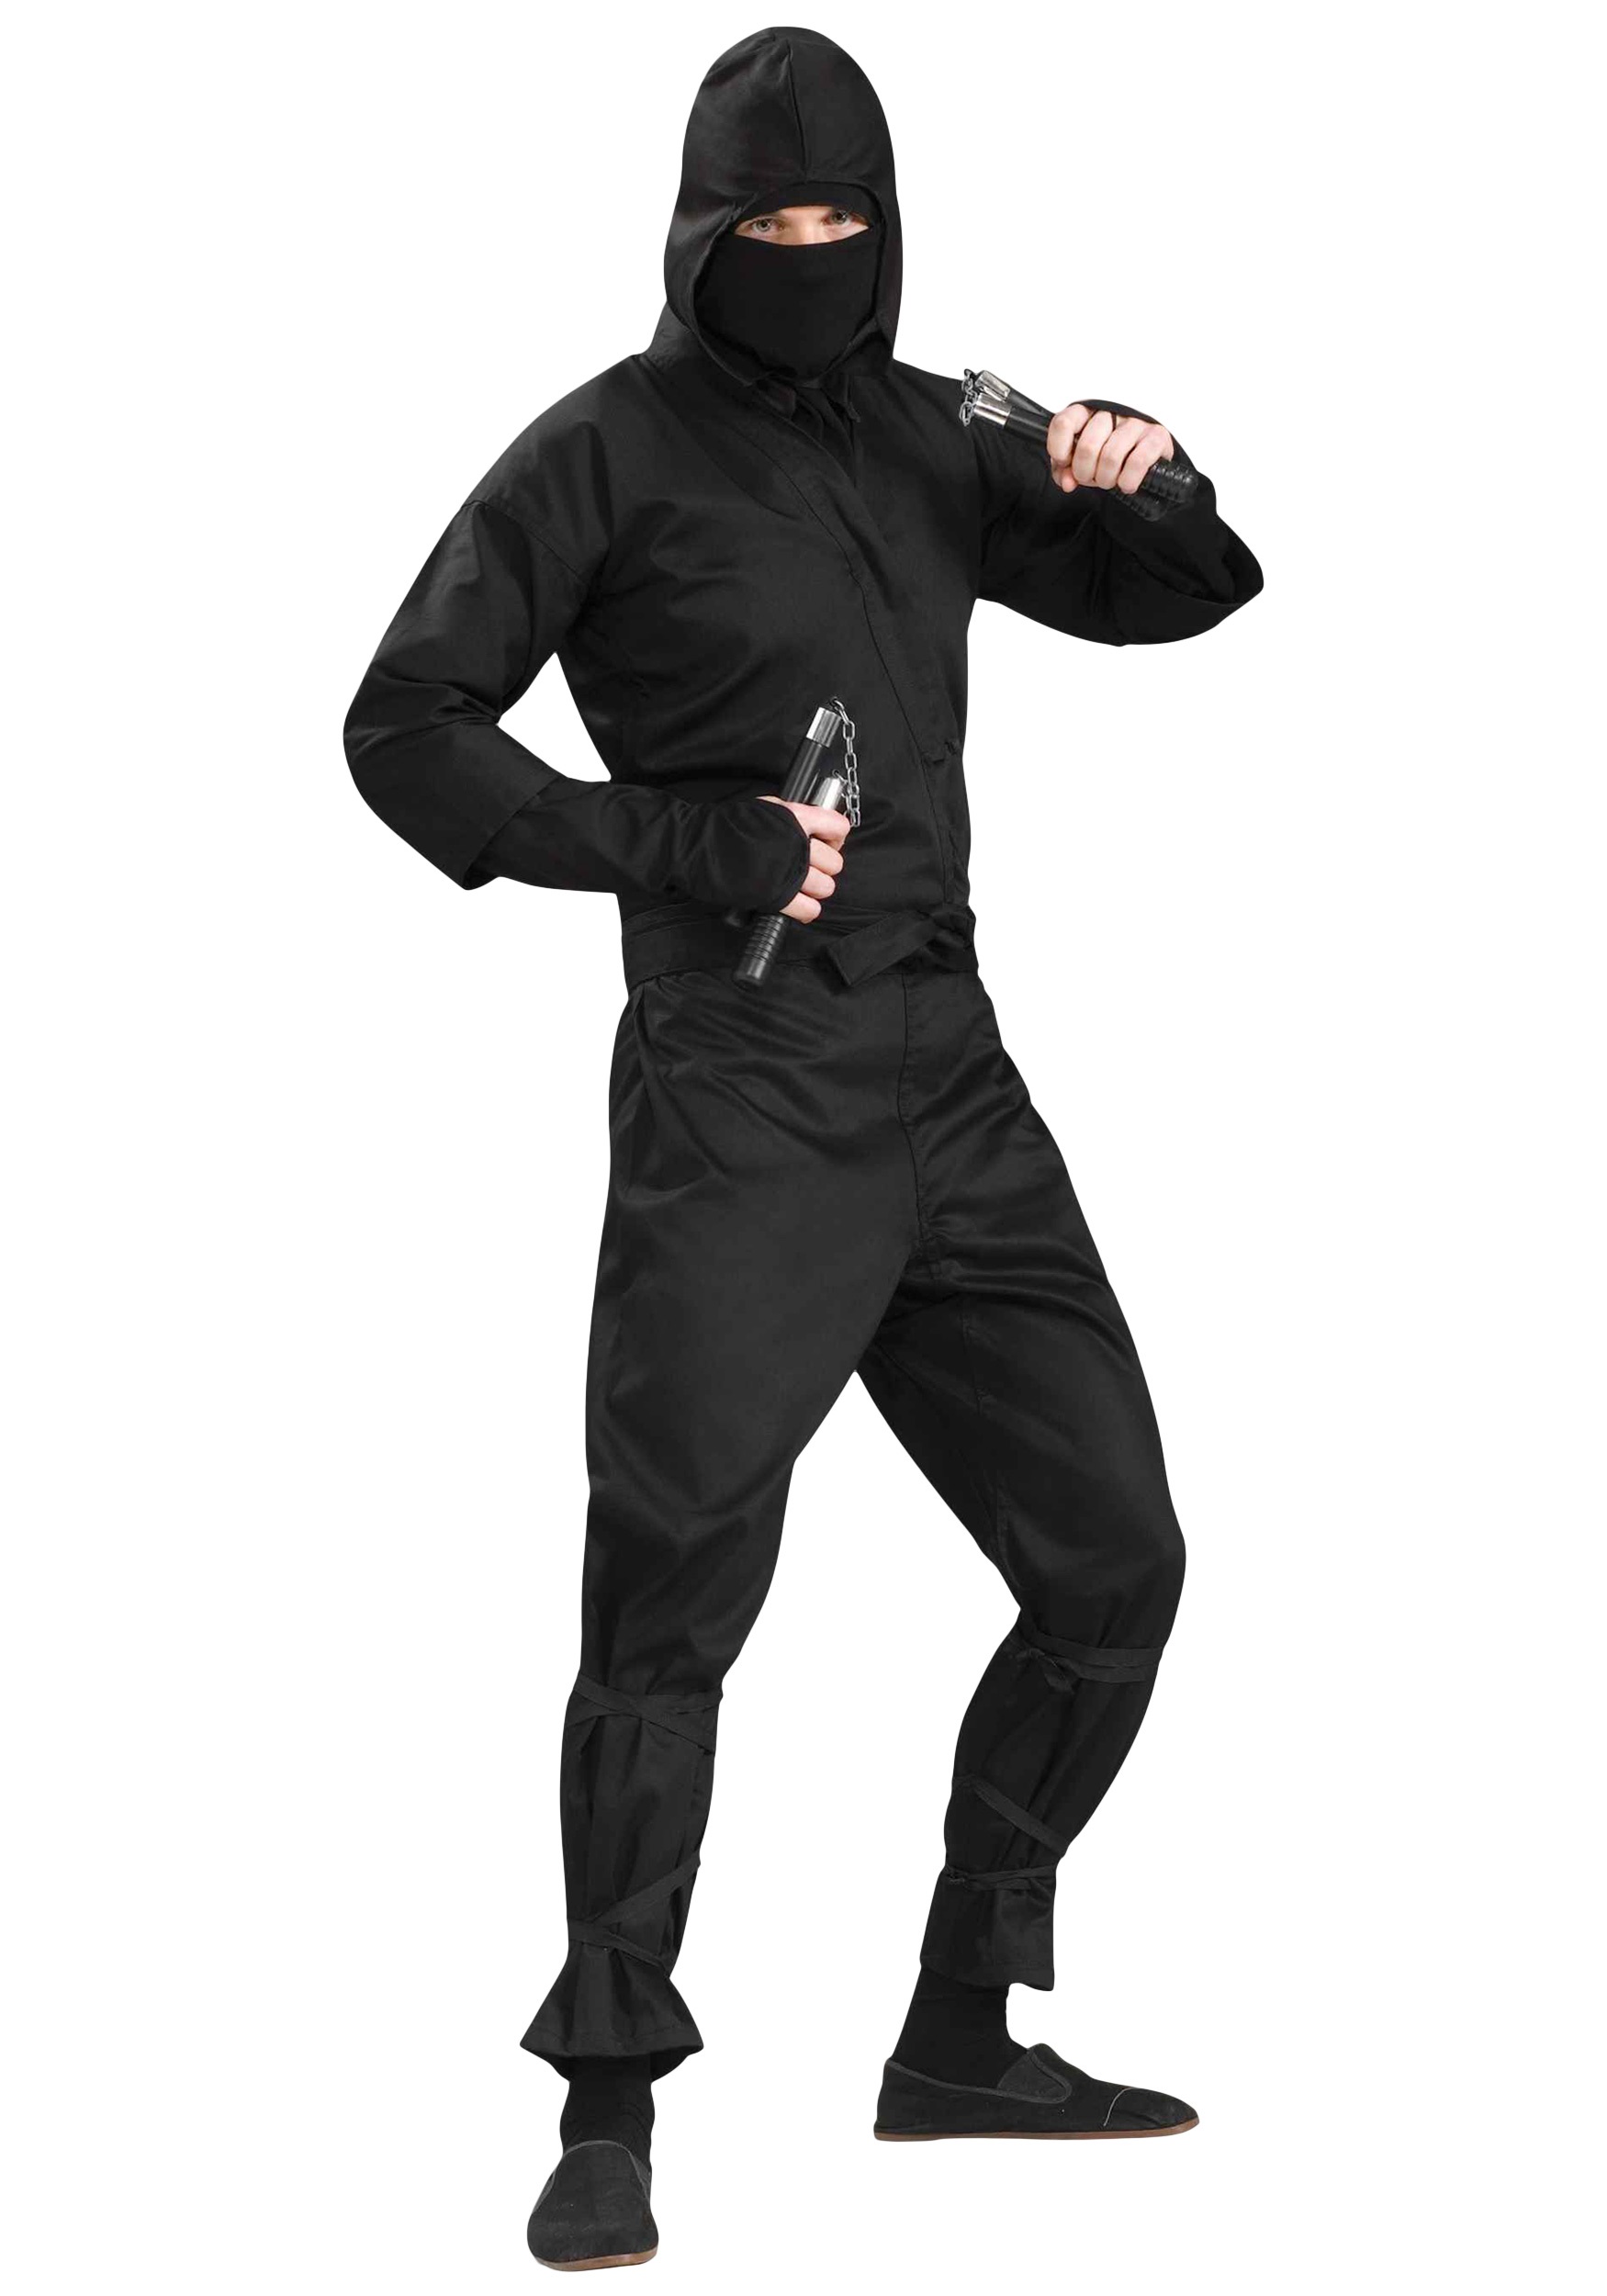 Adult Deluxe Ninja Costume